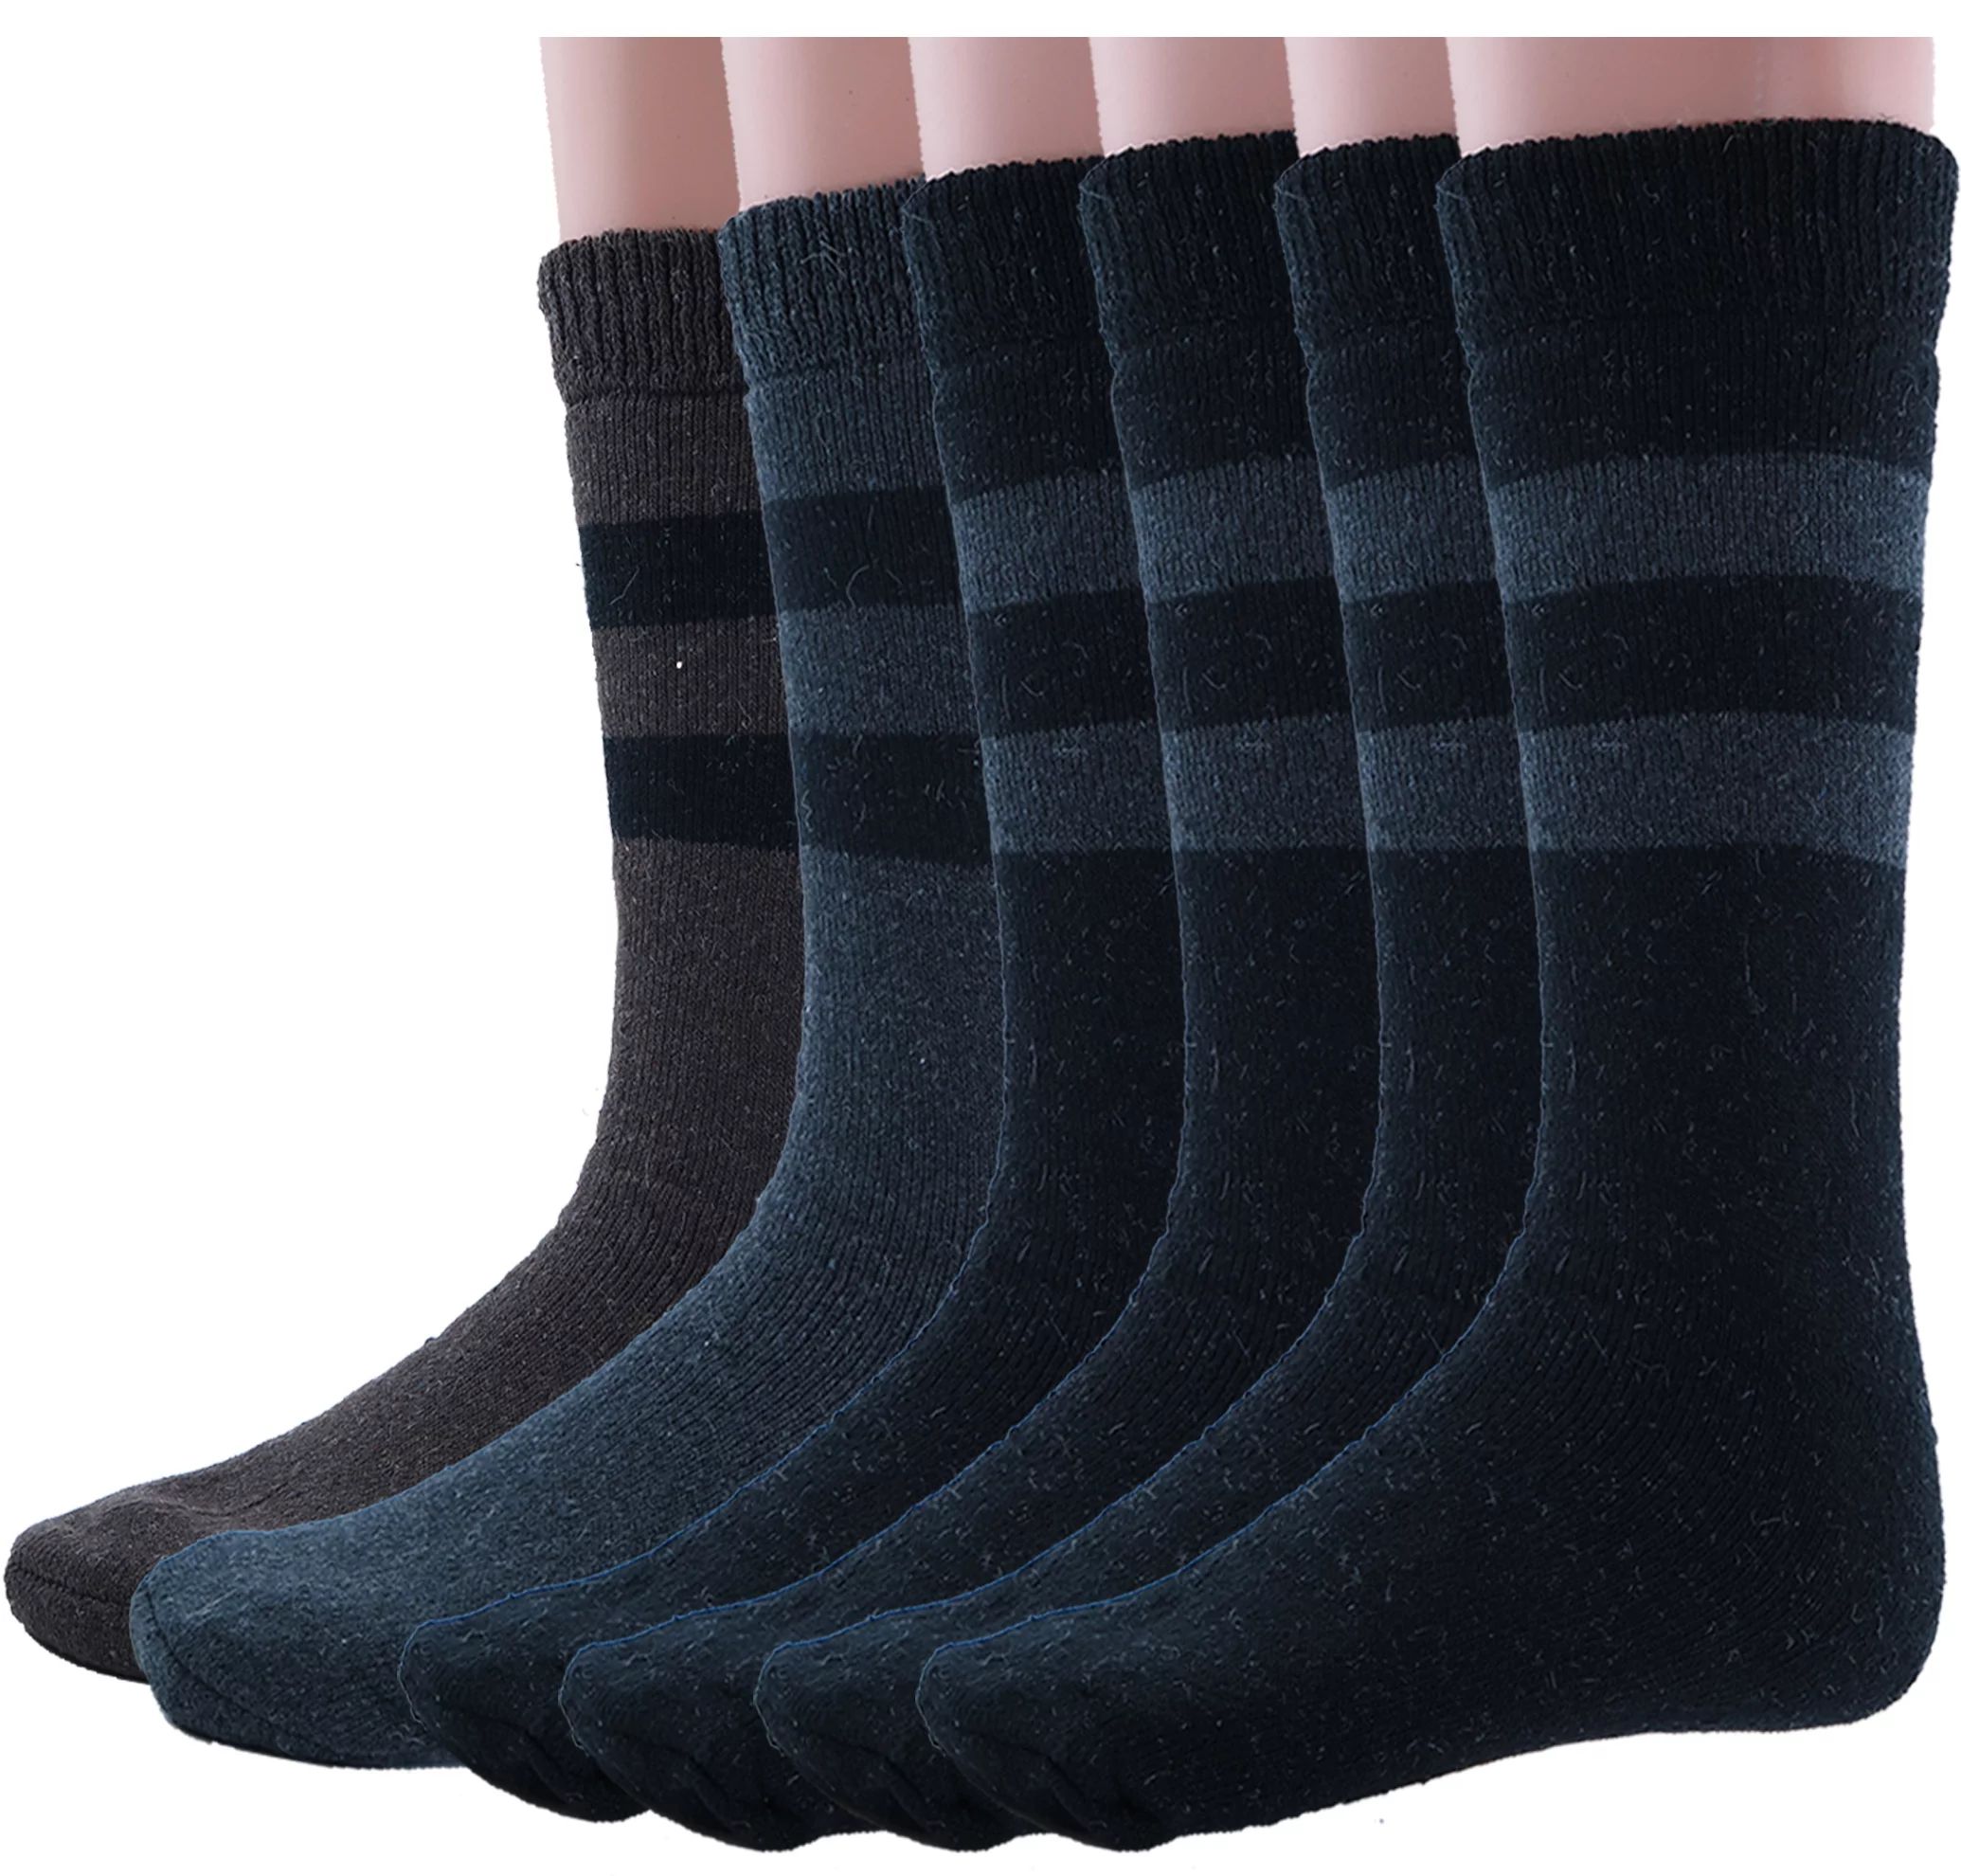 Debra Weitzner Wool Socks For Men and Women Thermal Winter Socks for Cold Weathers 6 Pack Grey/Br... | Walmart (US)